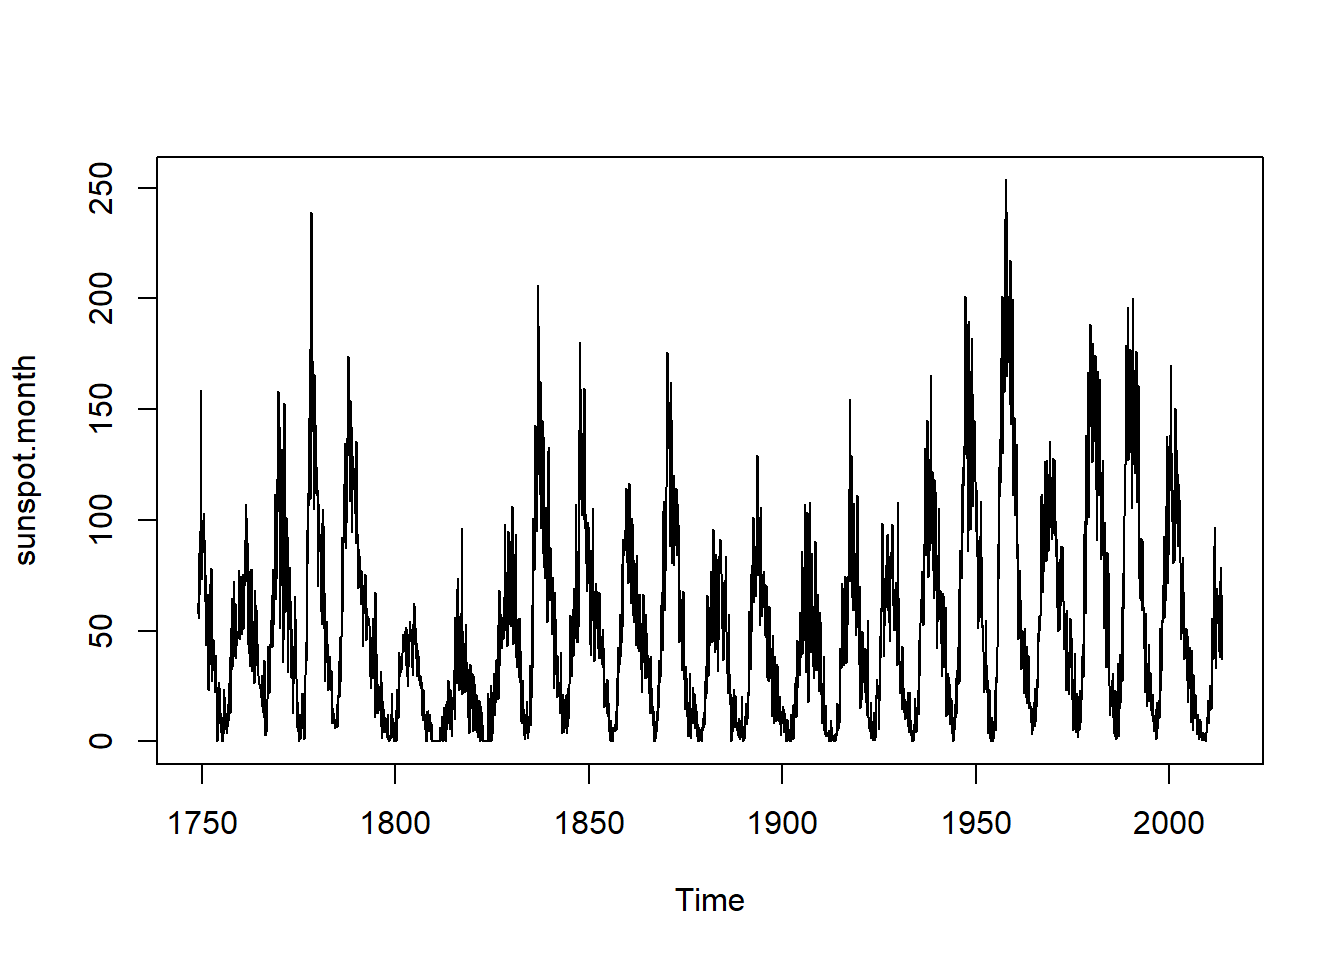 stl of E. coli data, with noisy annual signal